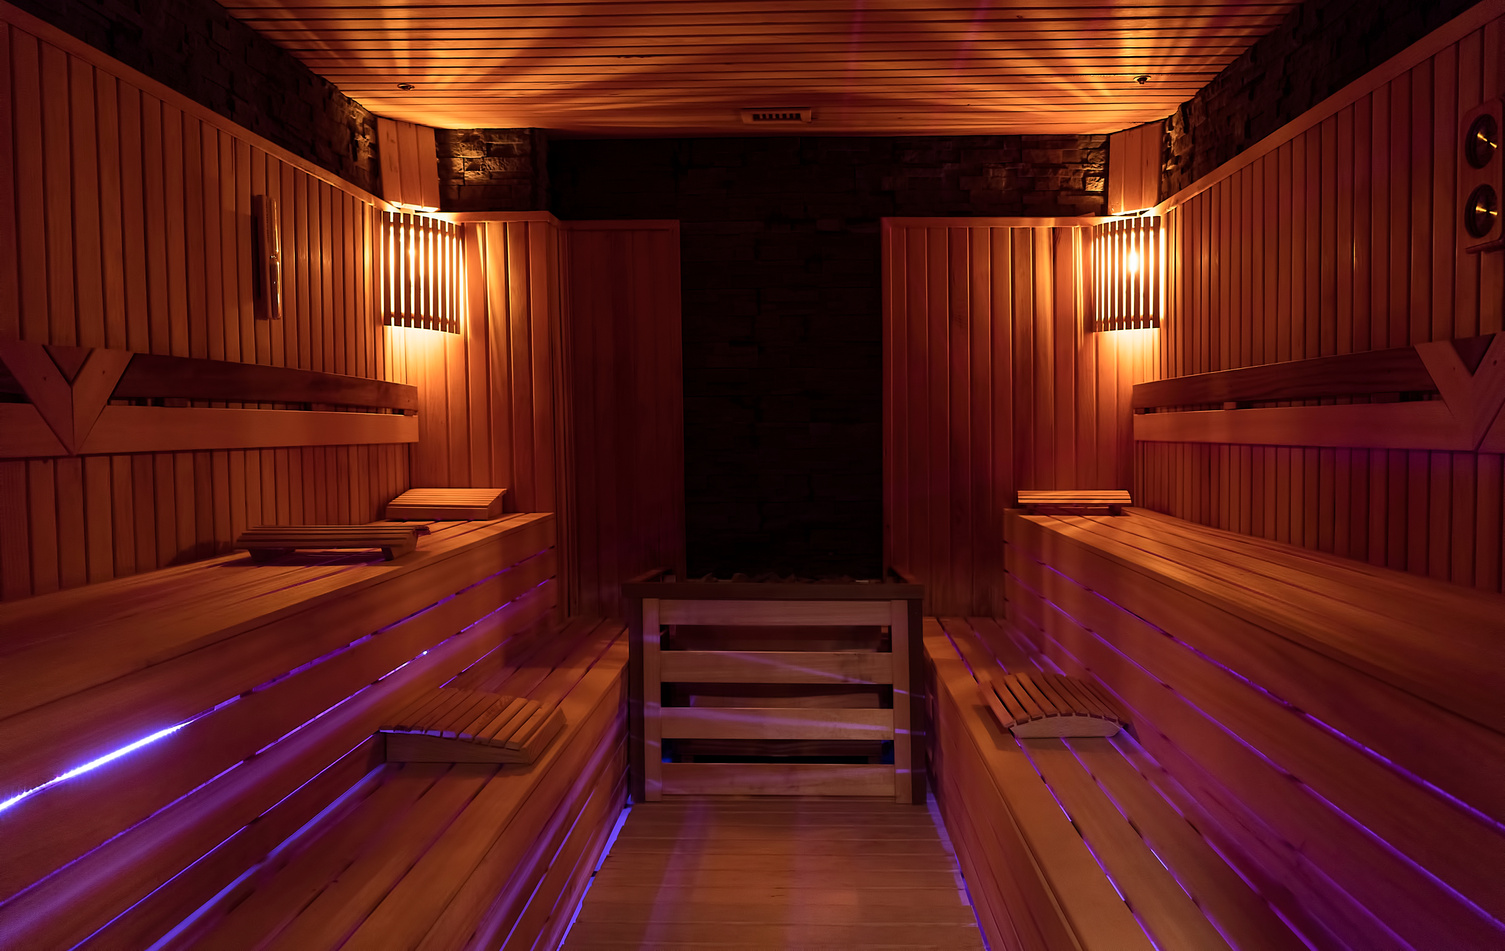 Sauna room in spa wellness center